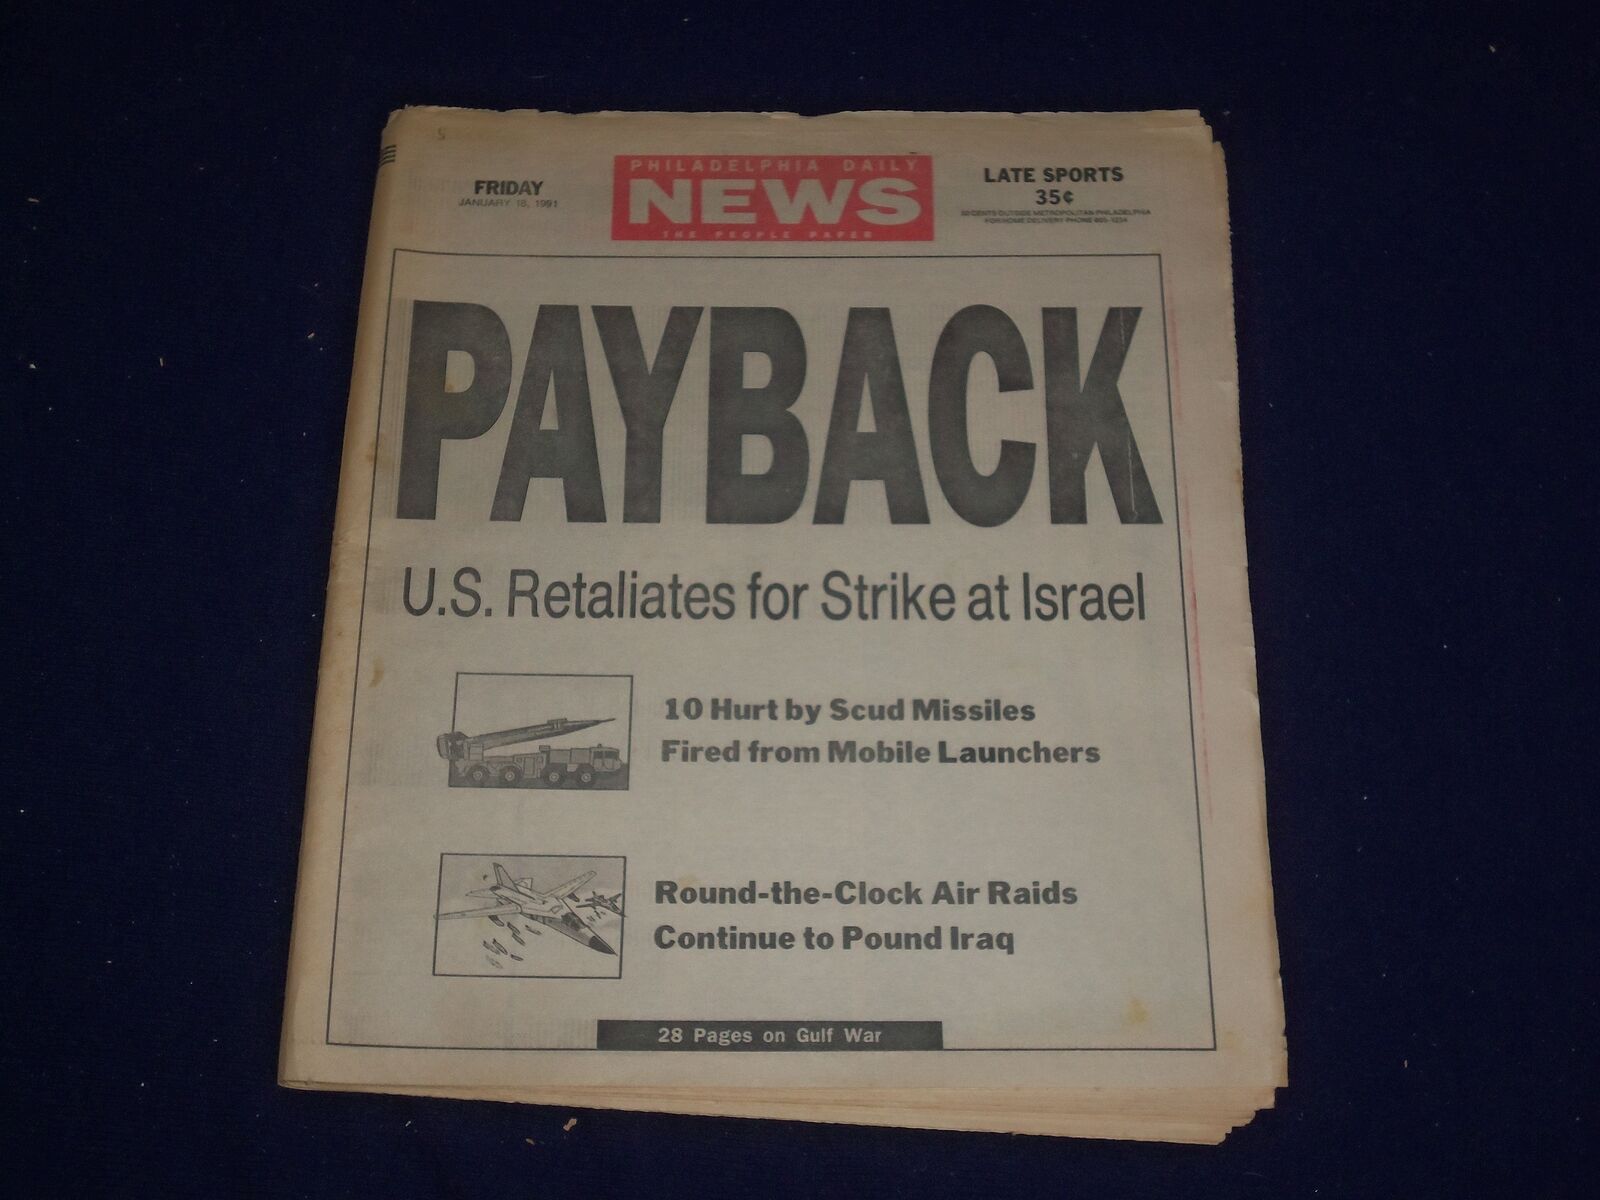 1991 JAN 18 PHILADELPHIA DAILY NEWS - U.S. RETALIATES FOR ISRAEL STRIKE- NP 2981